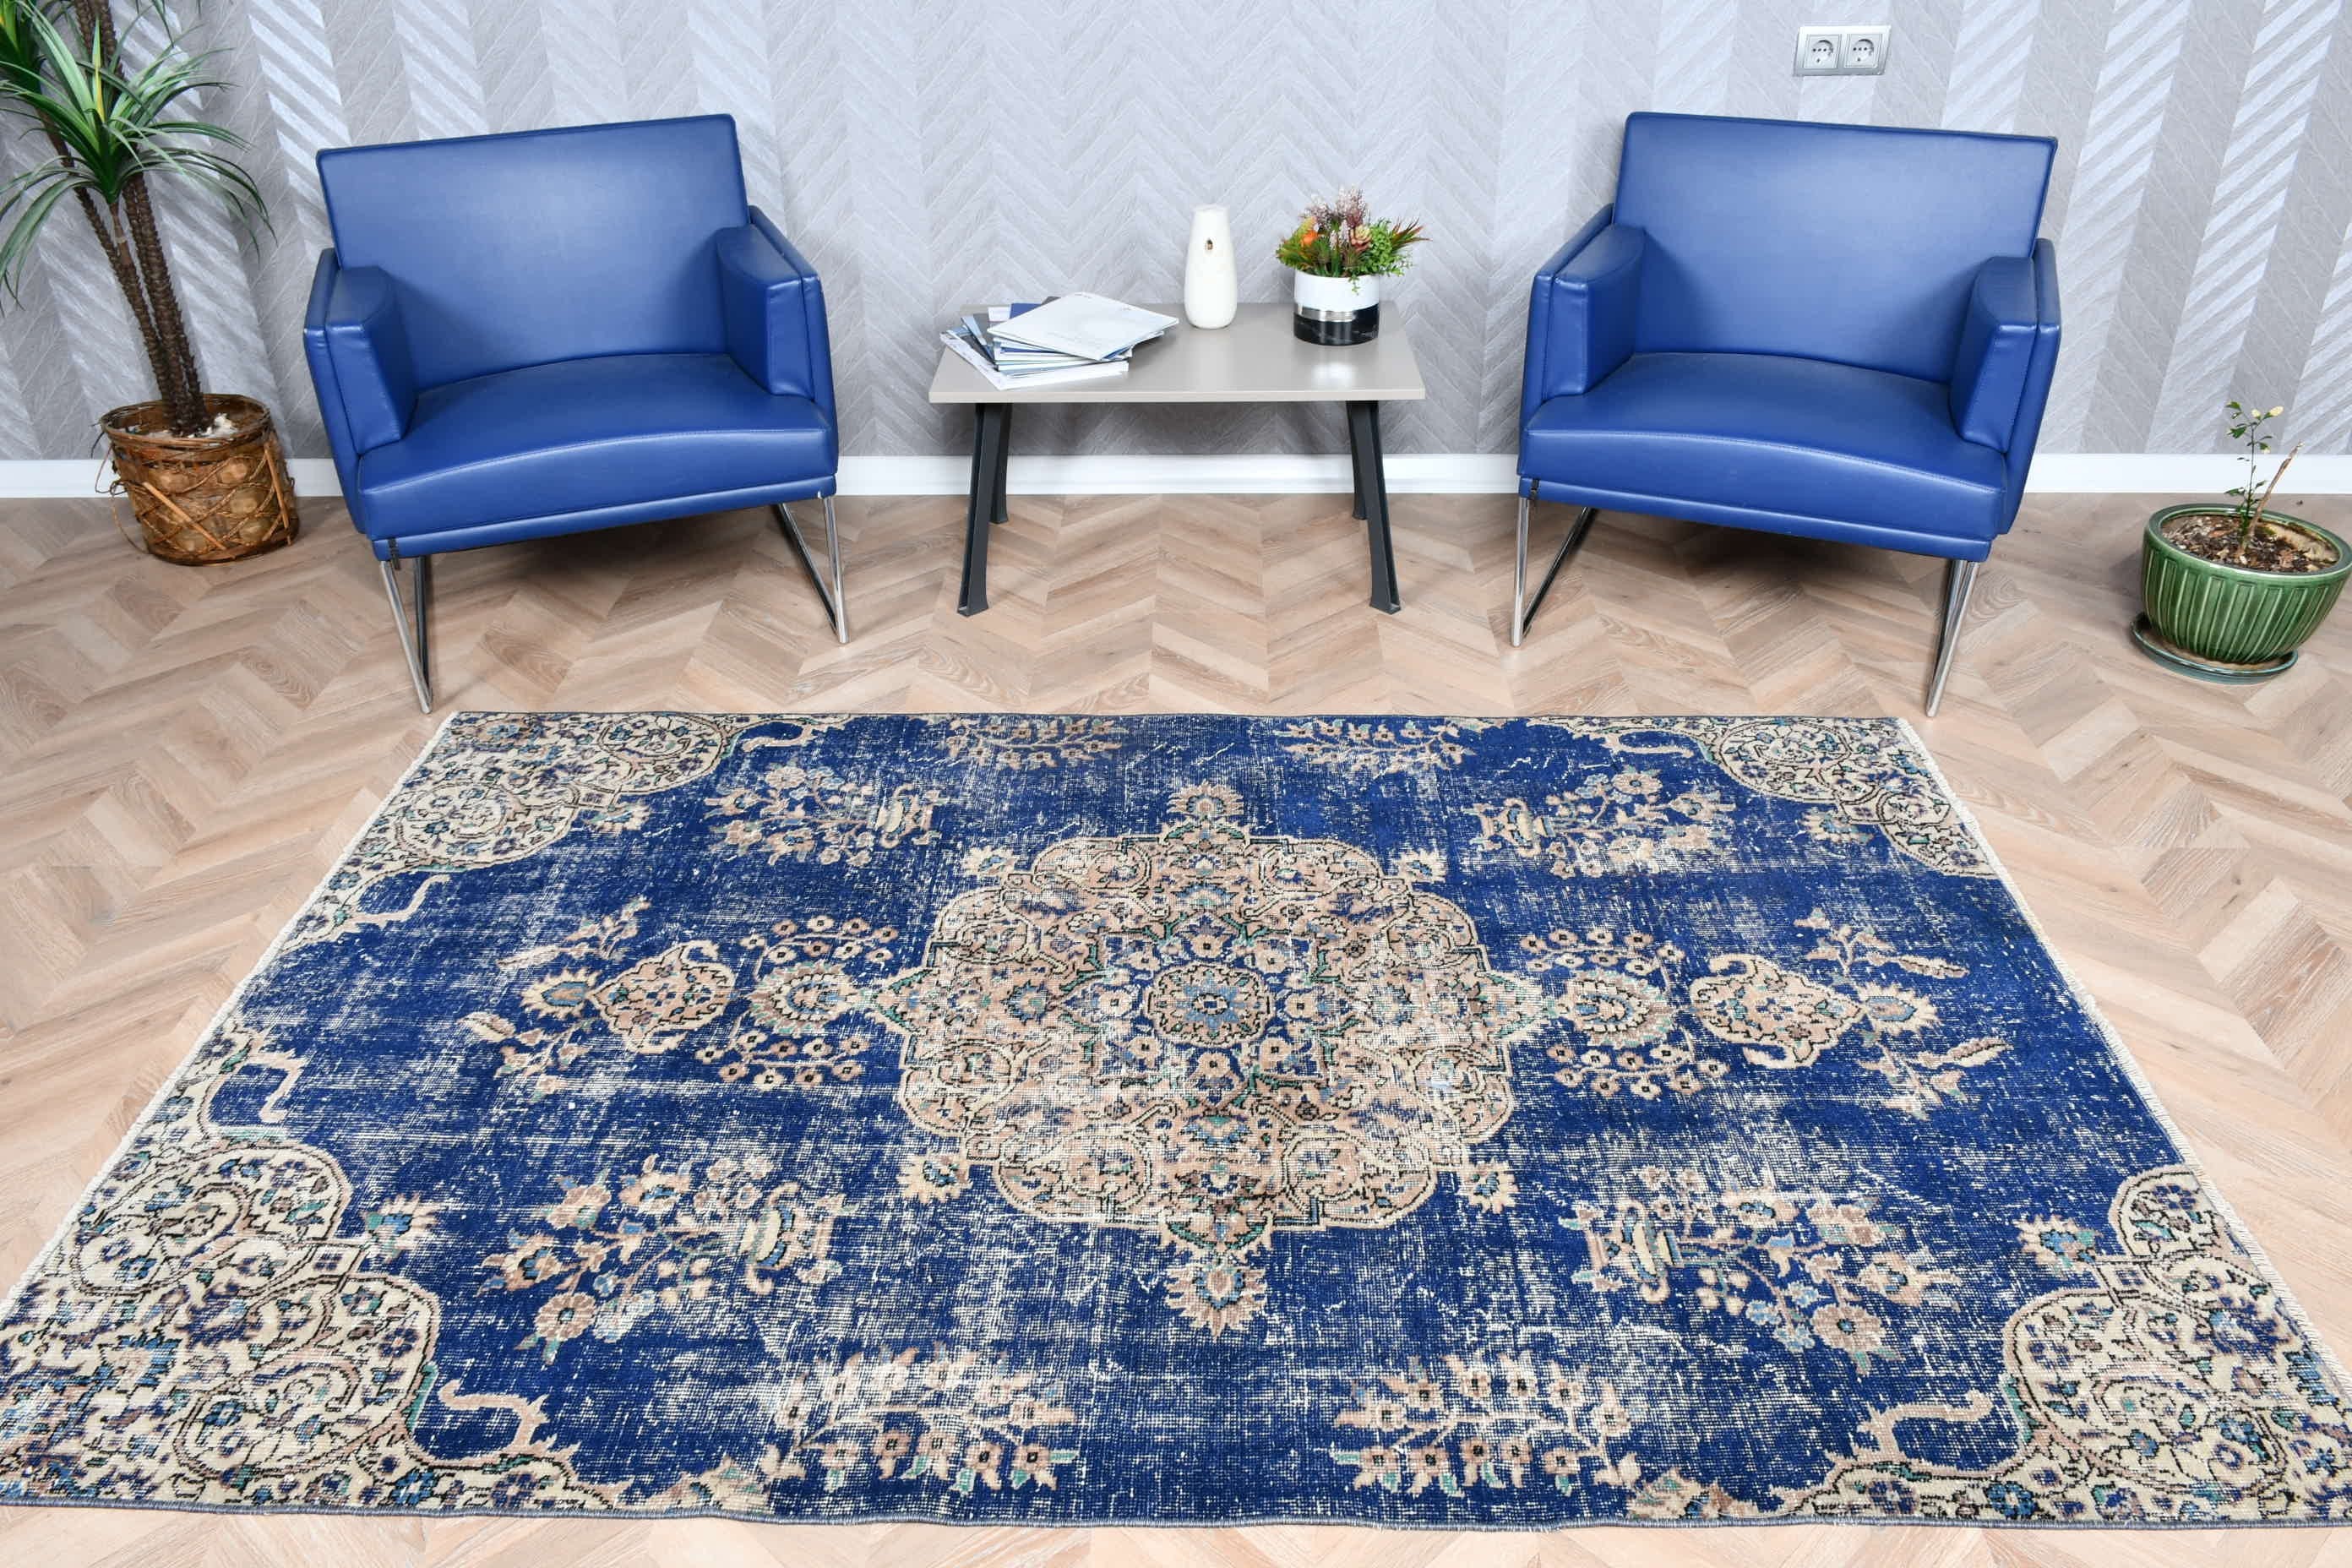 Turkish Rug, Rugs for Area, Home Decor Rug, Bedroom Rugs, Custom Rugs, Blue Anatolian Rug, Vintage Rug, Kitchen Rug, 4.8x7.4 ft Area Rug